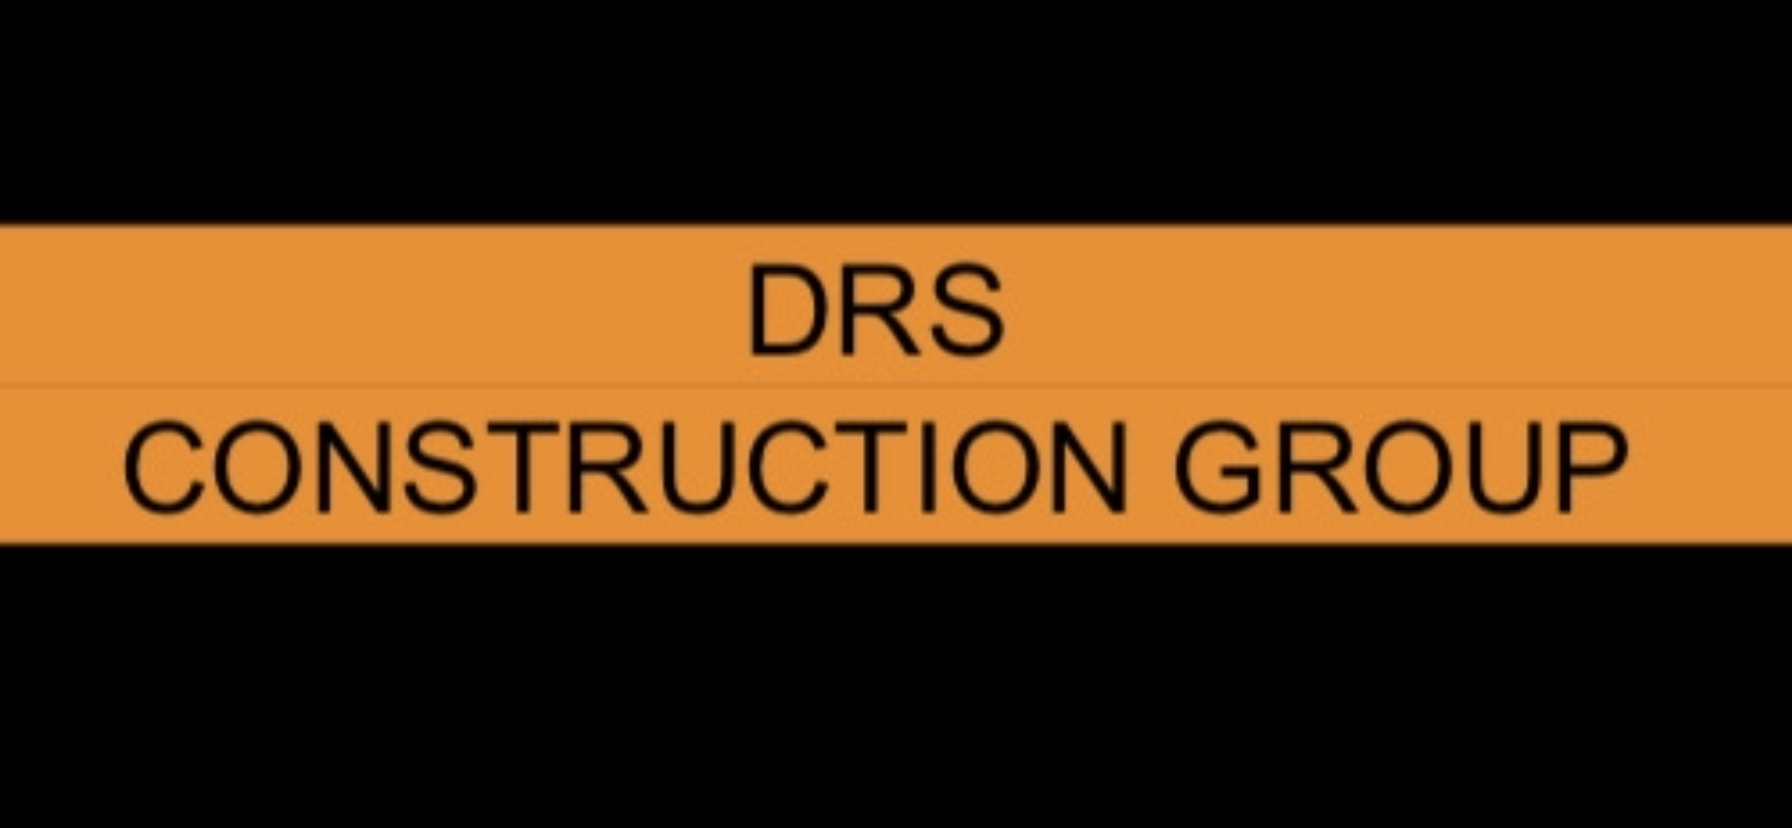 DRS's logo